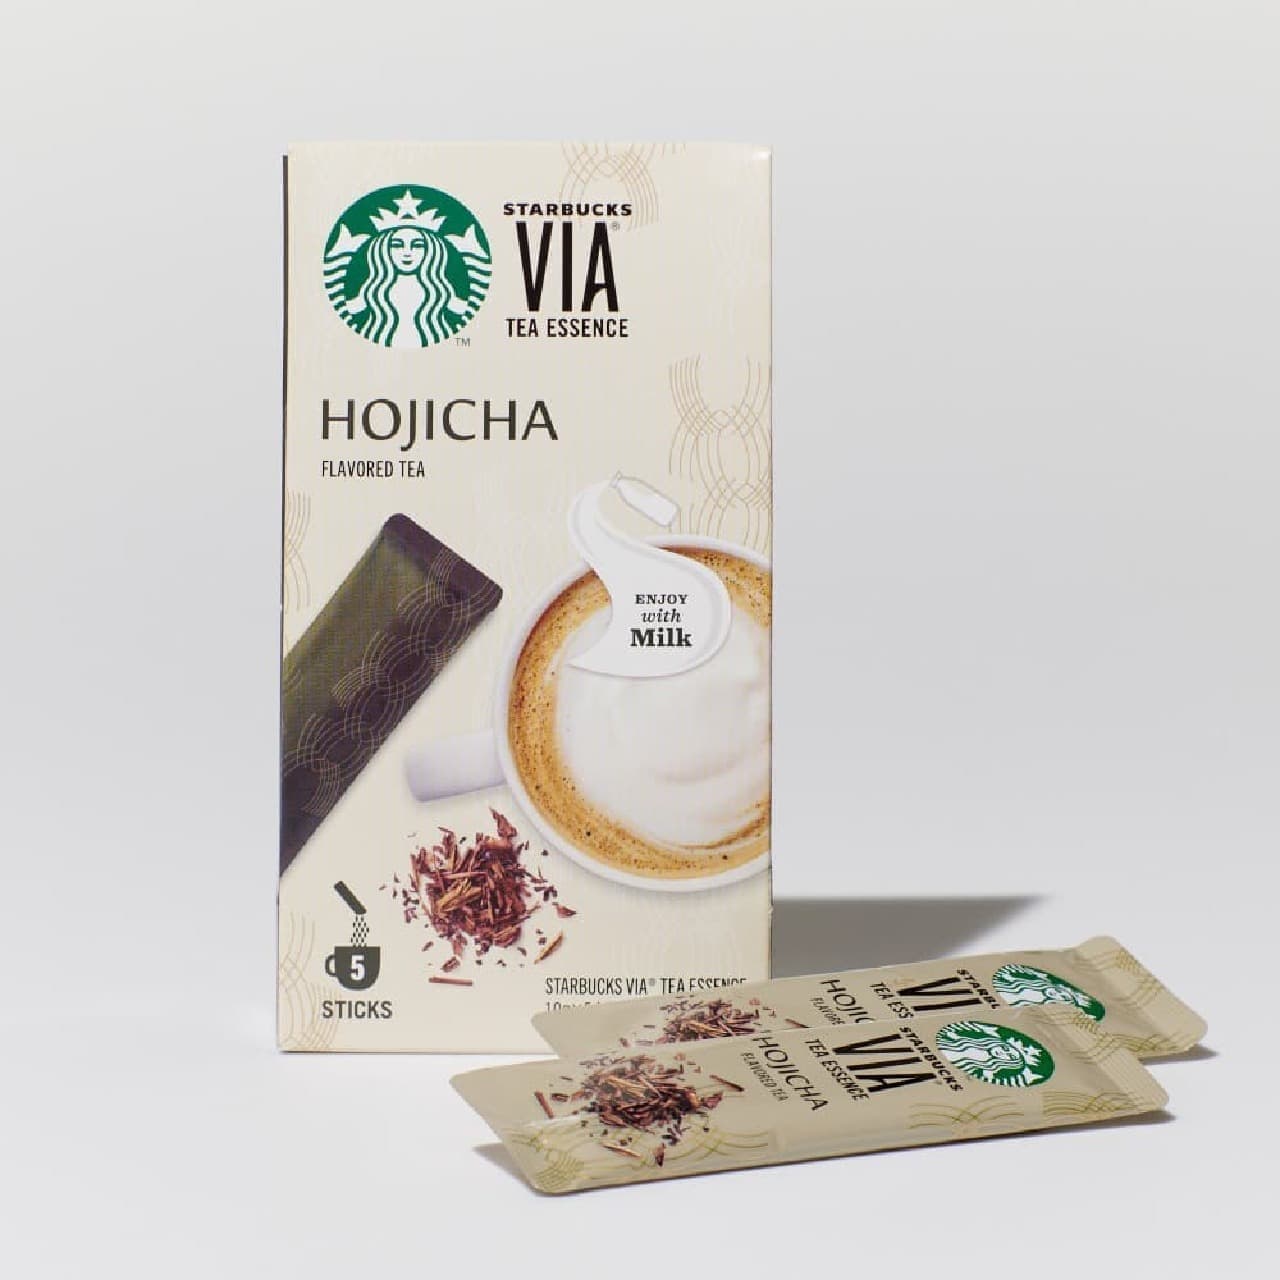 Starbucks Starbucks Via Tea Essence Houjicha 5-pack